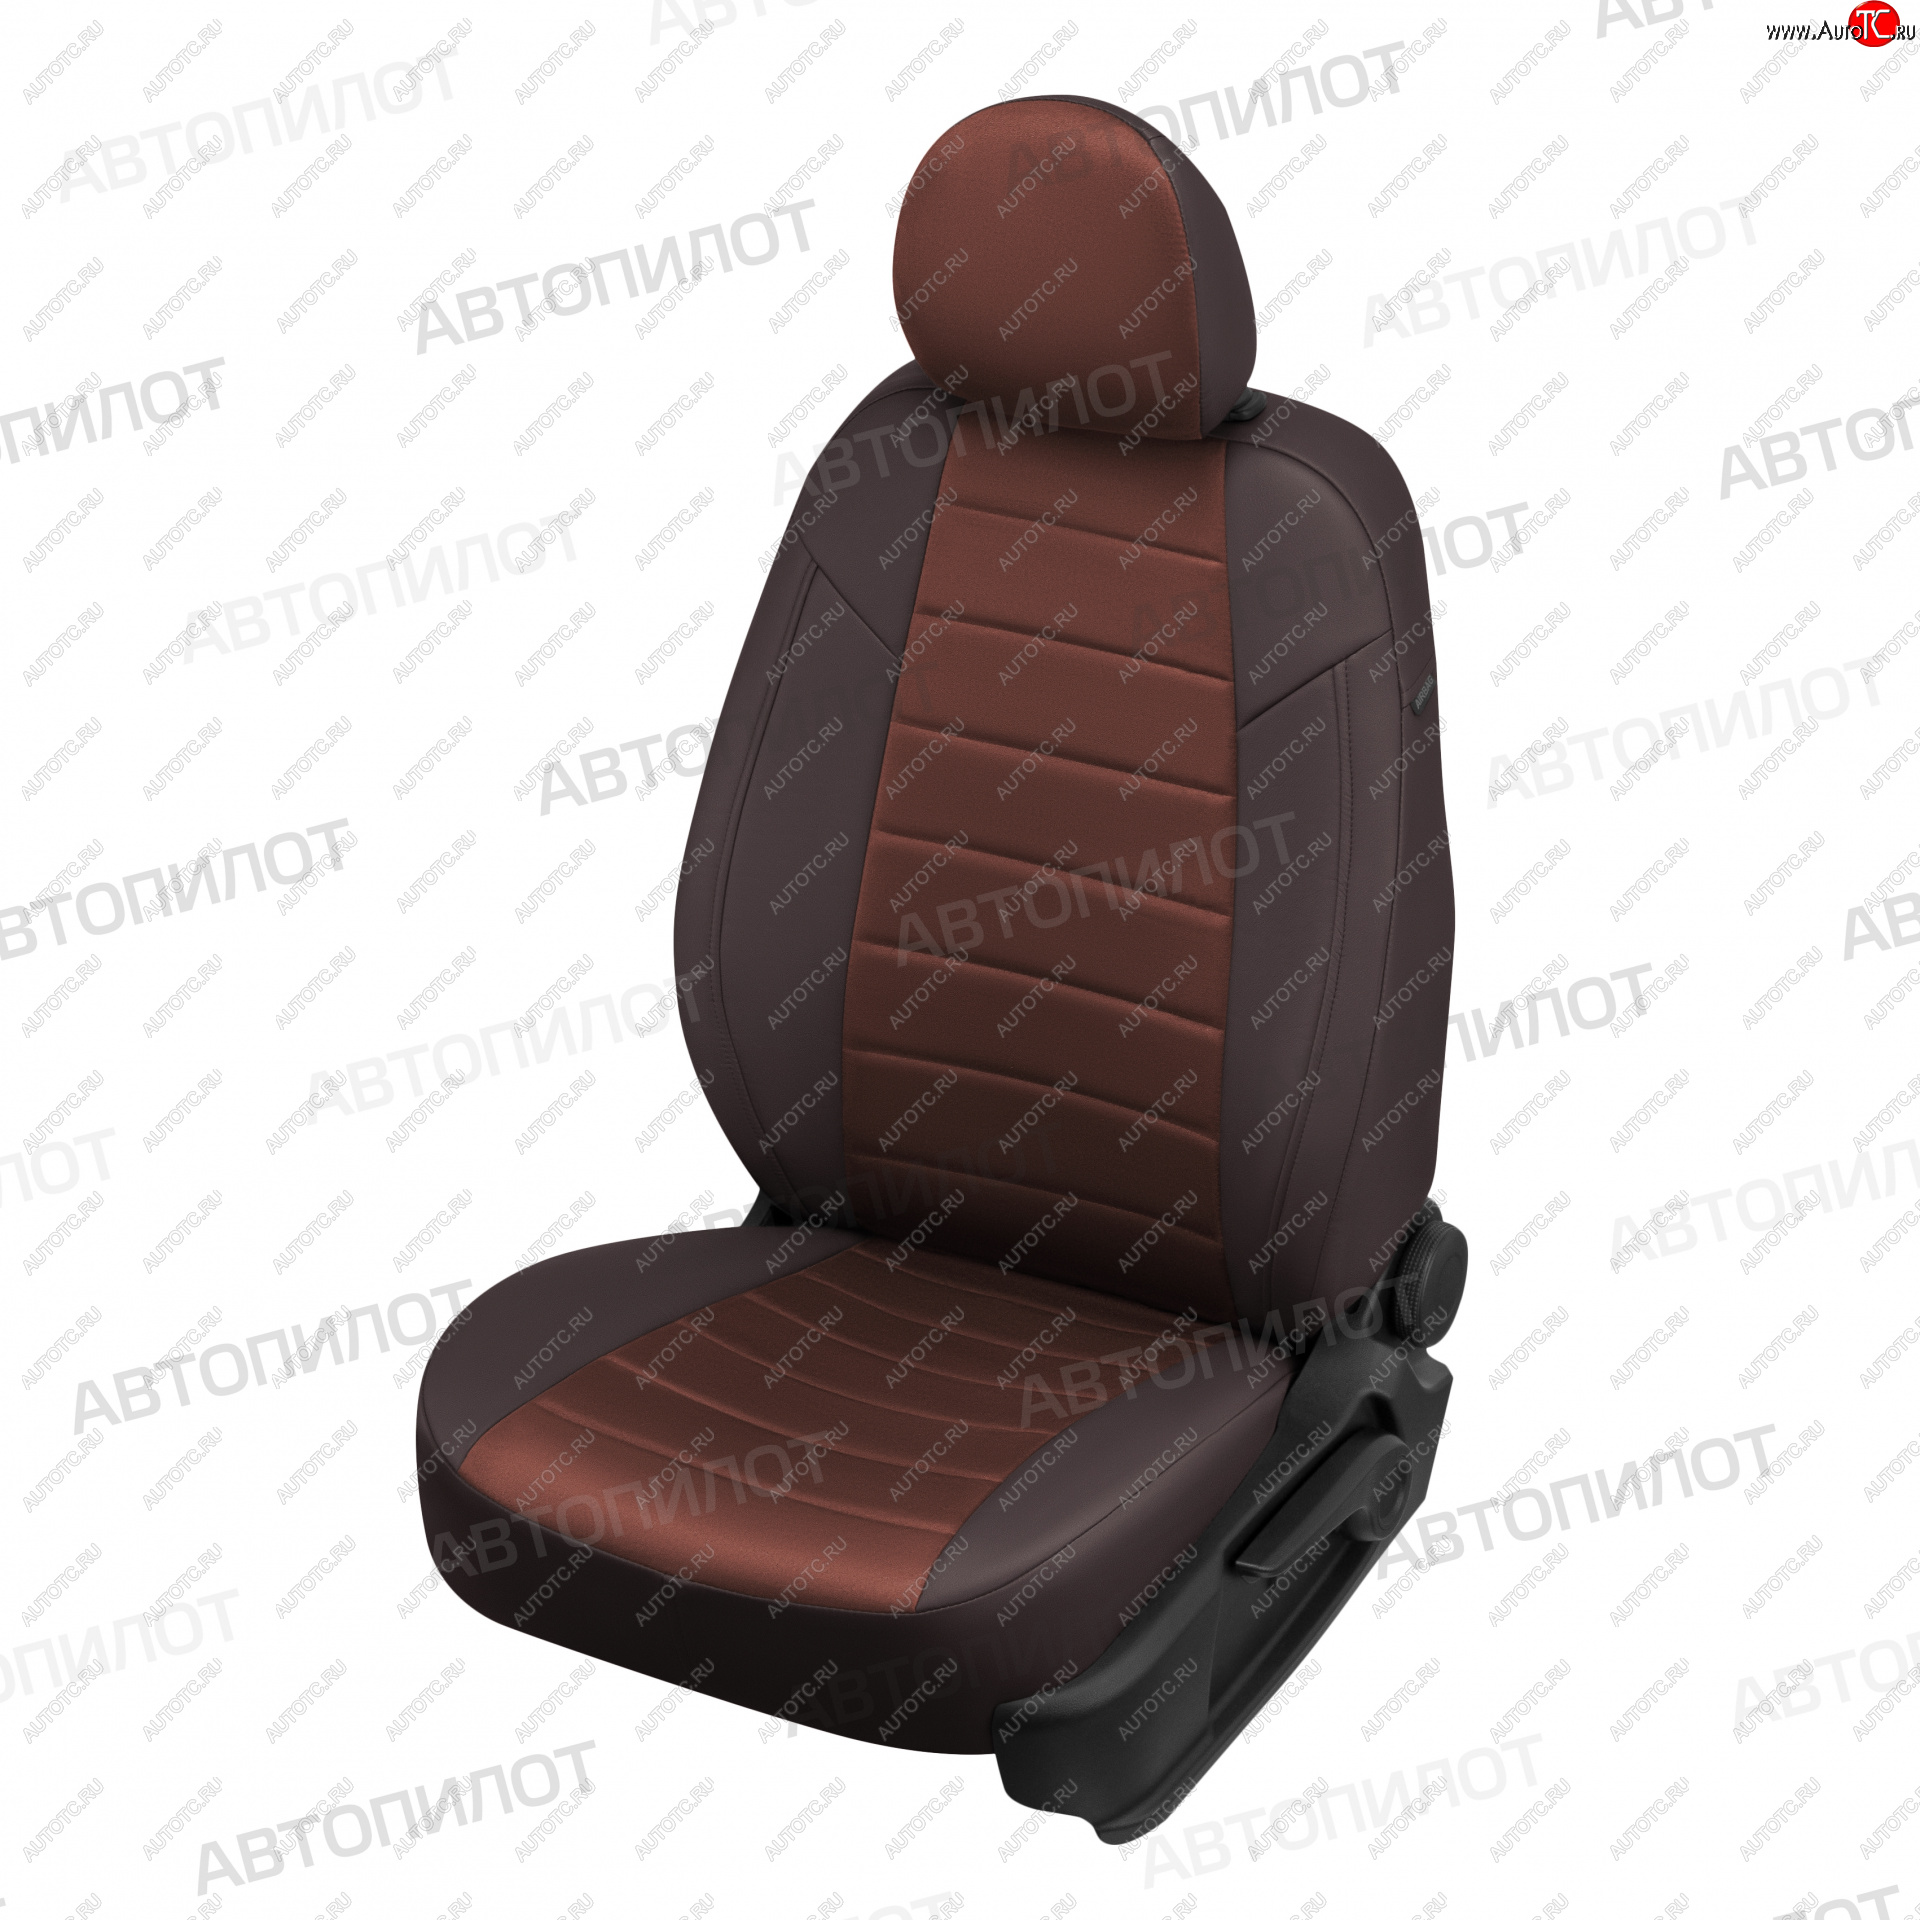 13 449 р. Чехлы сидений (экокожа/алькантара) Автопилот  KIA Soul  2 PS (2014-2019) (шоколад)